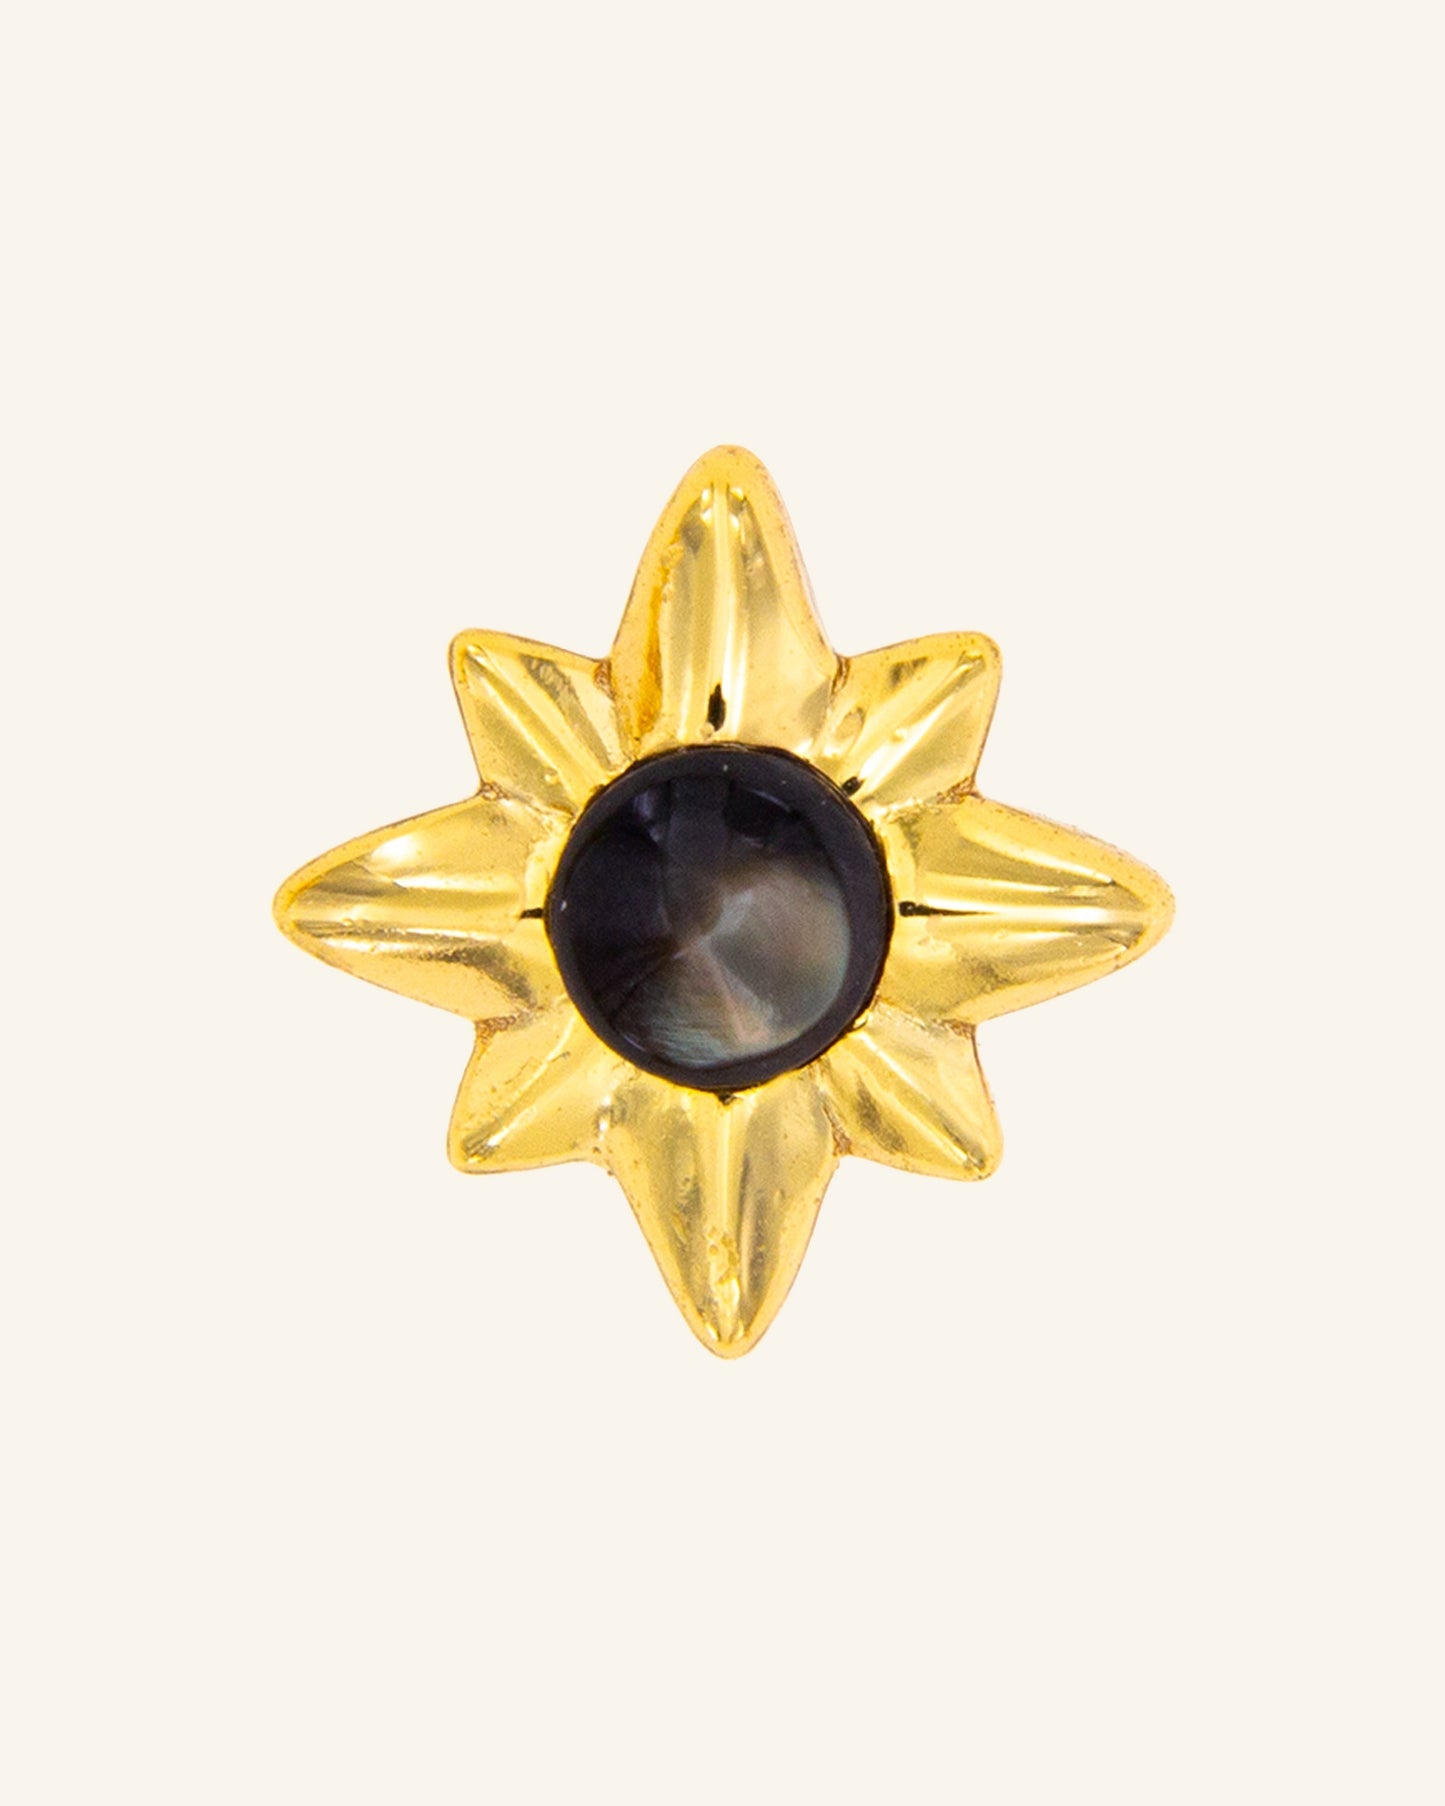 Estrella Minor pendant with black mother of pearl